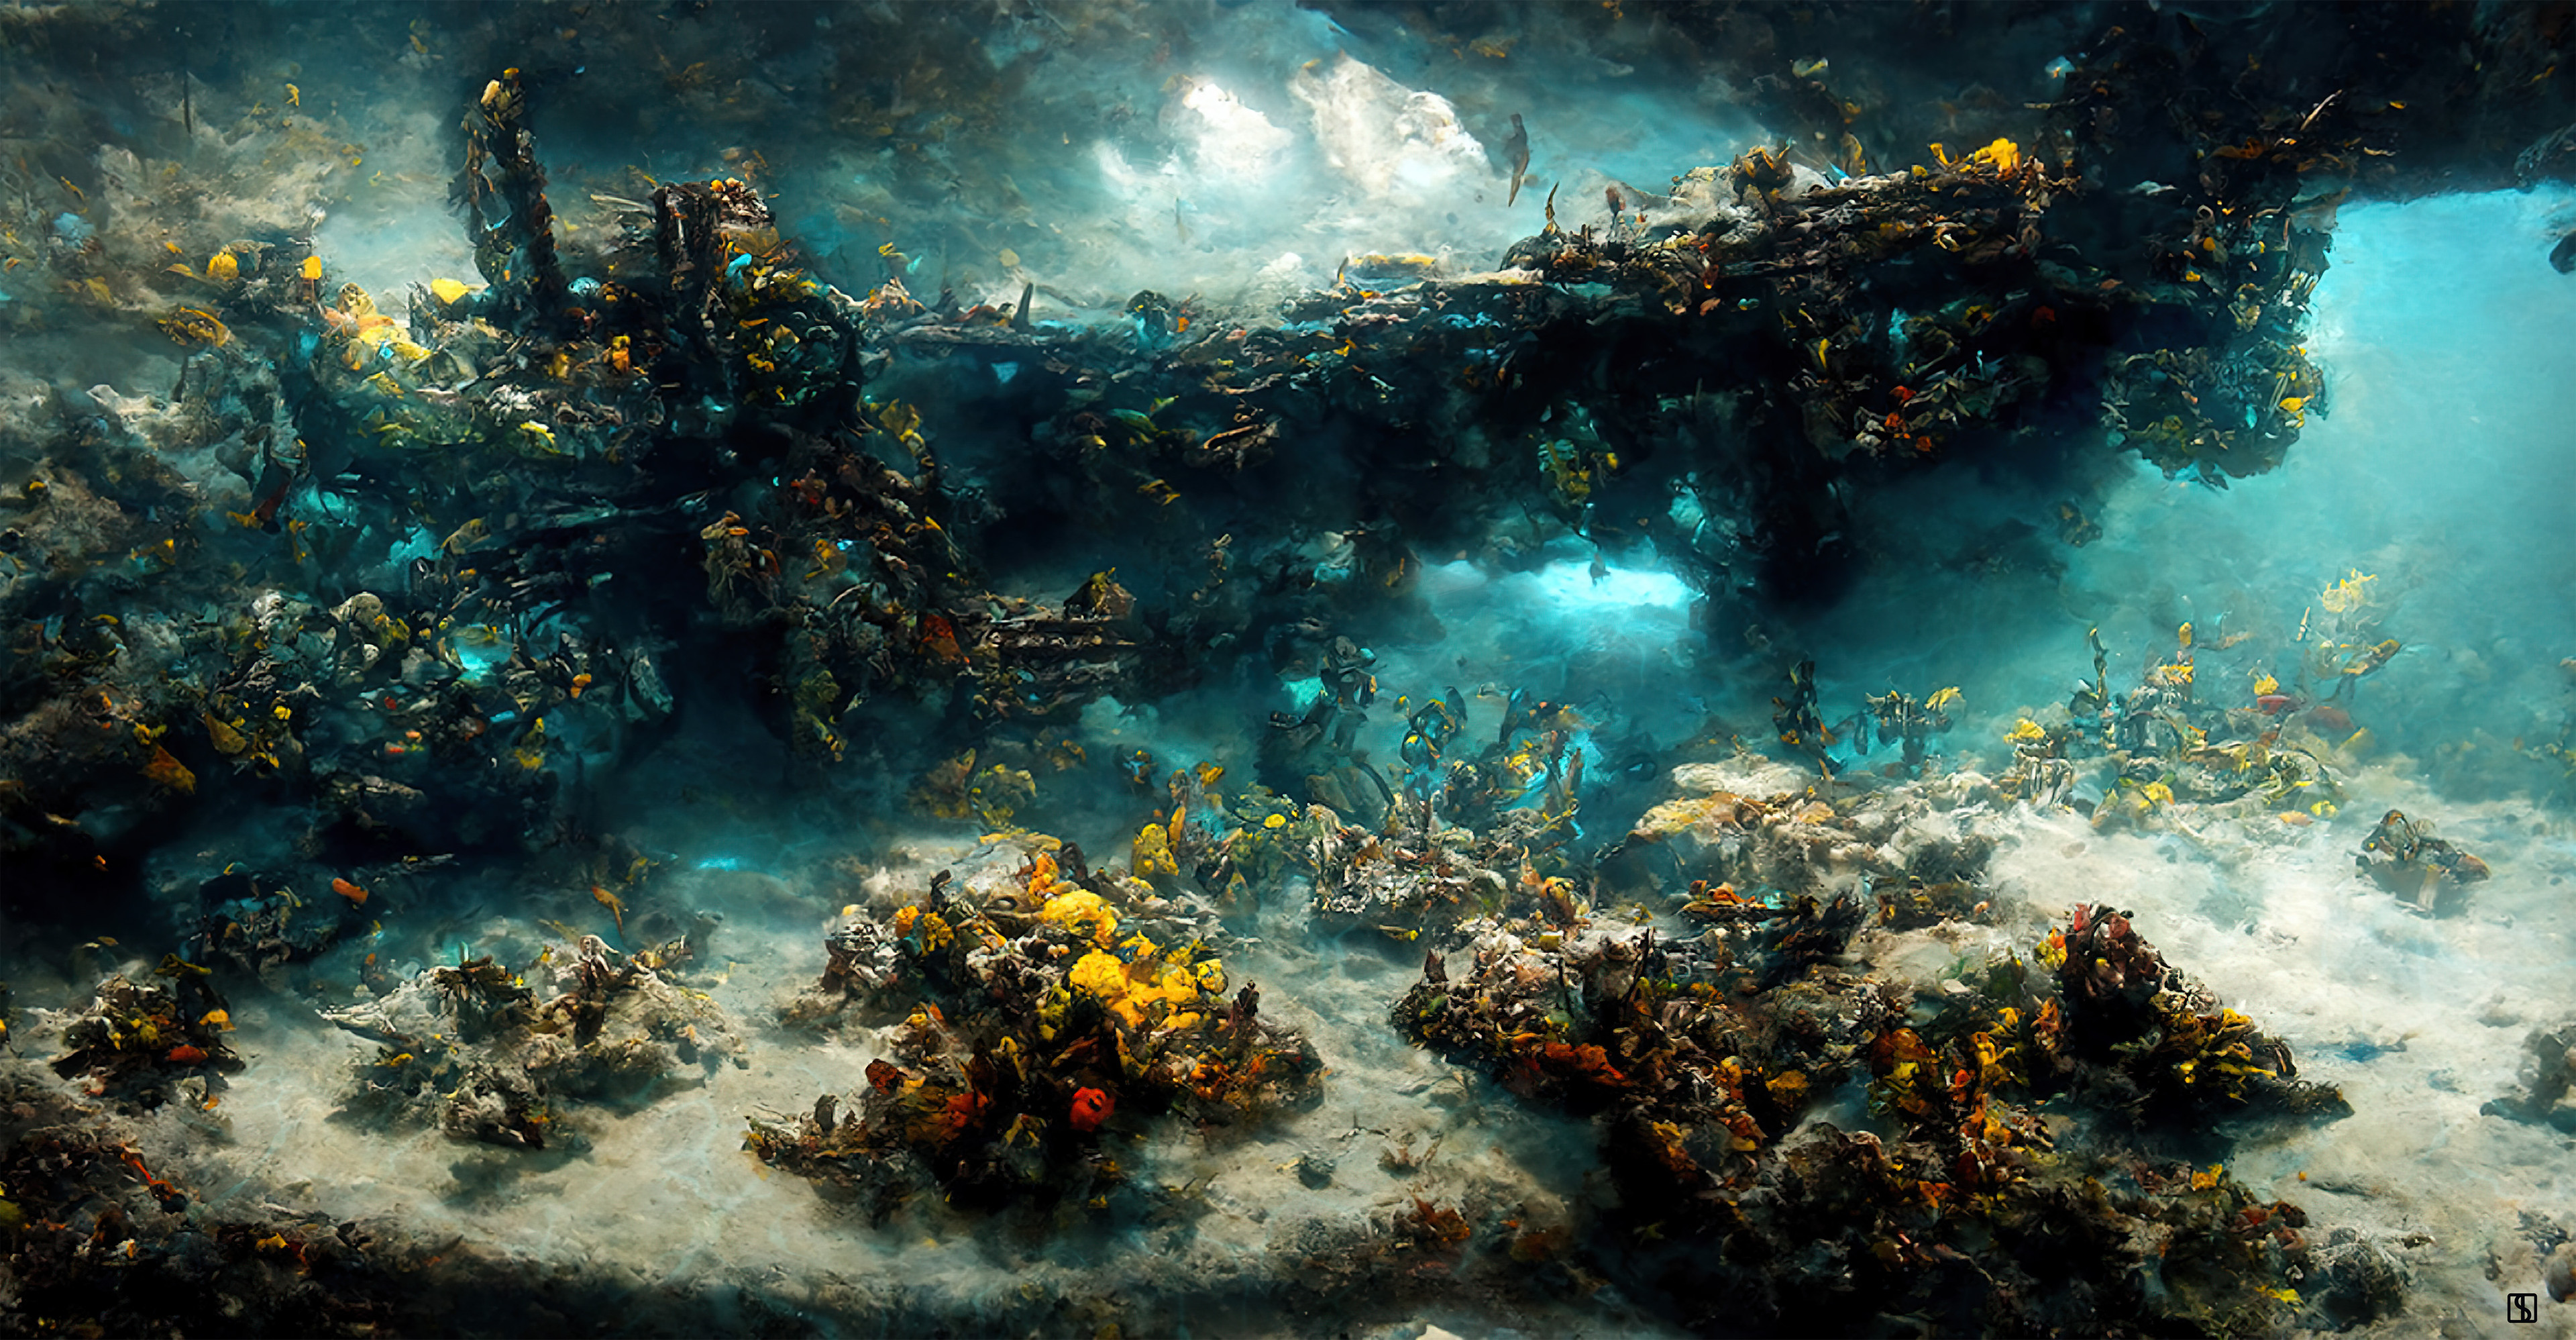 Coral Reef - Shipwreck - 001 - A